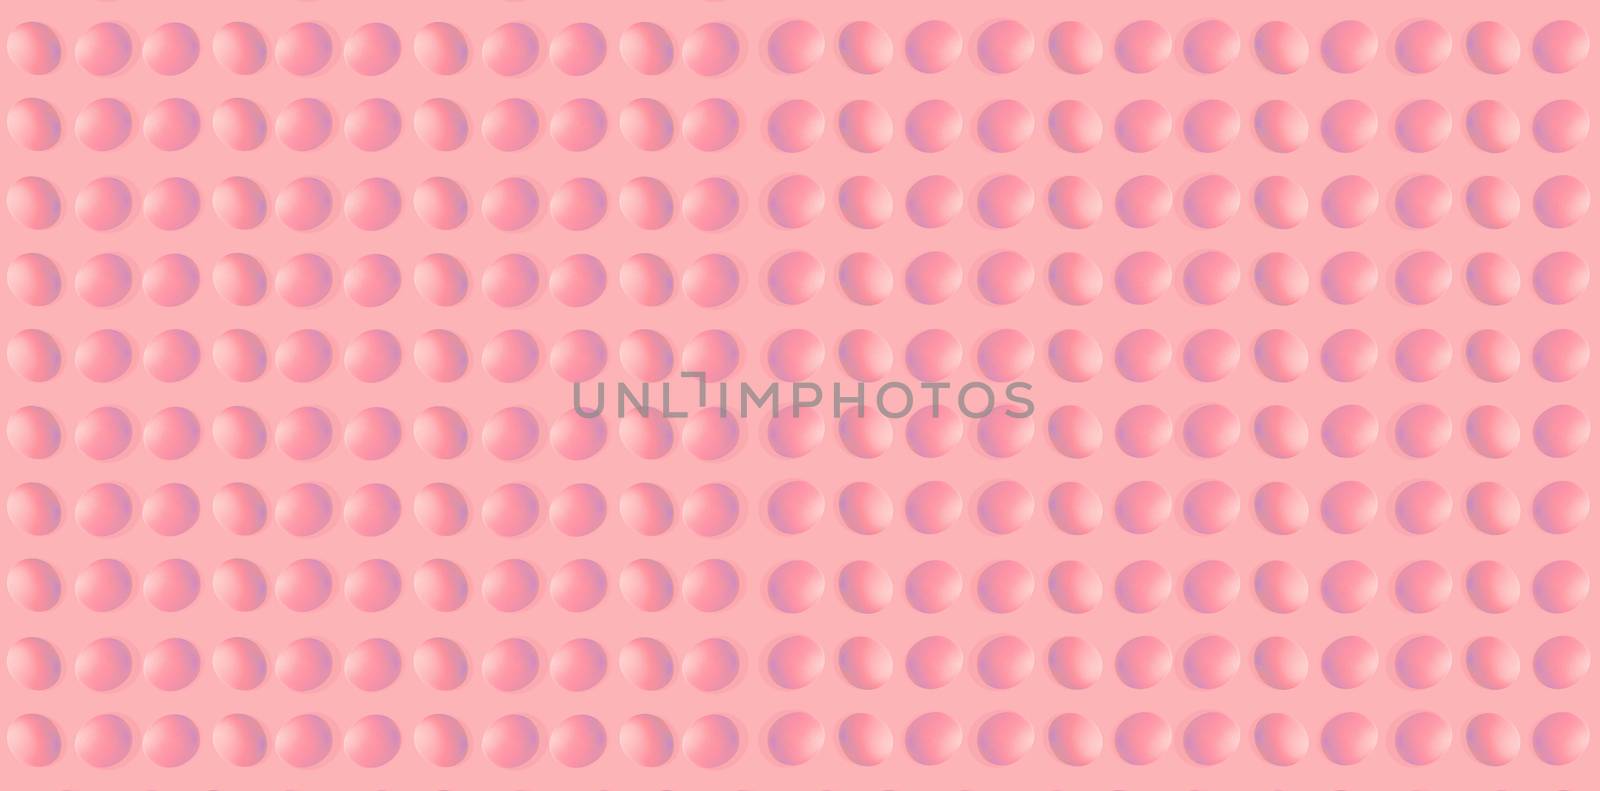 Eggs shape pink pattern by Deniskarpenkov